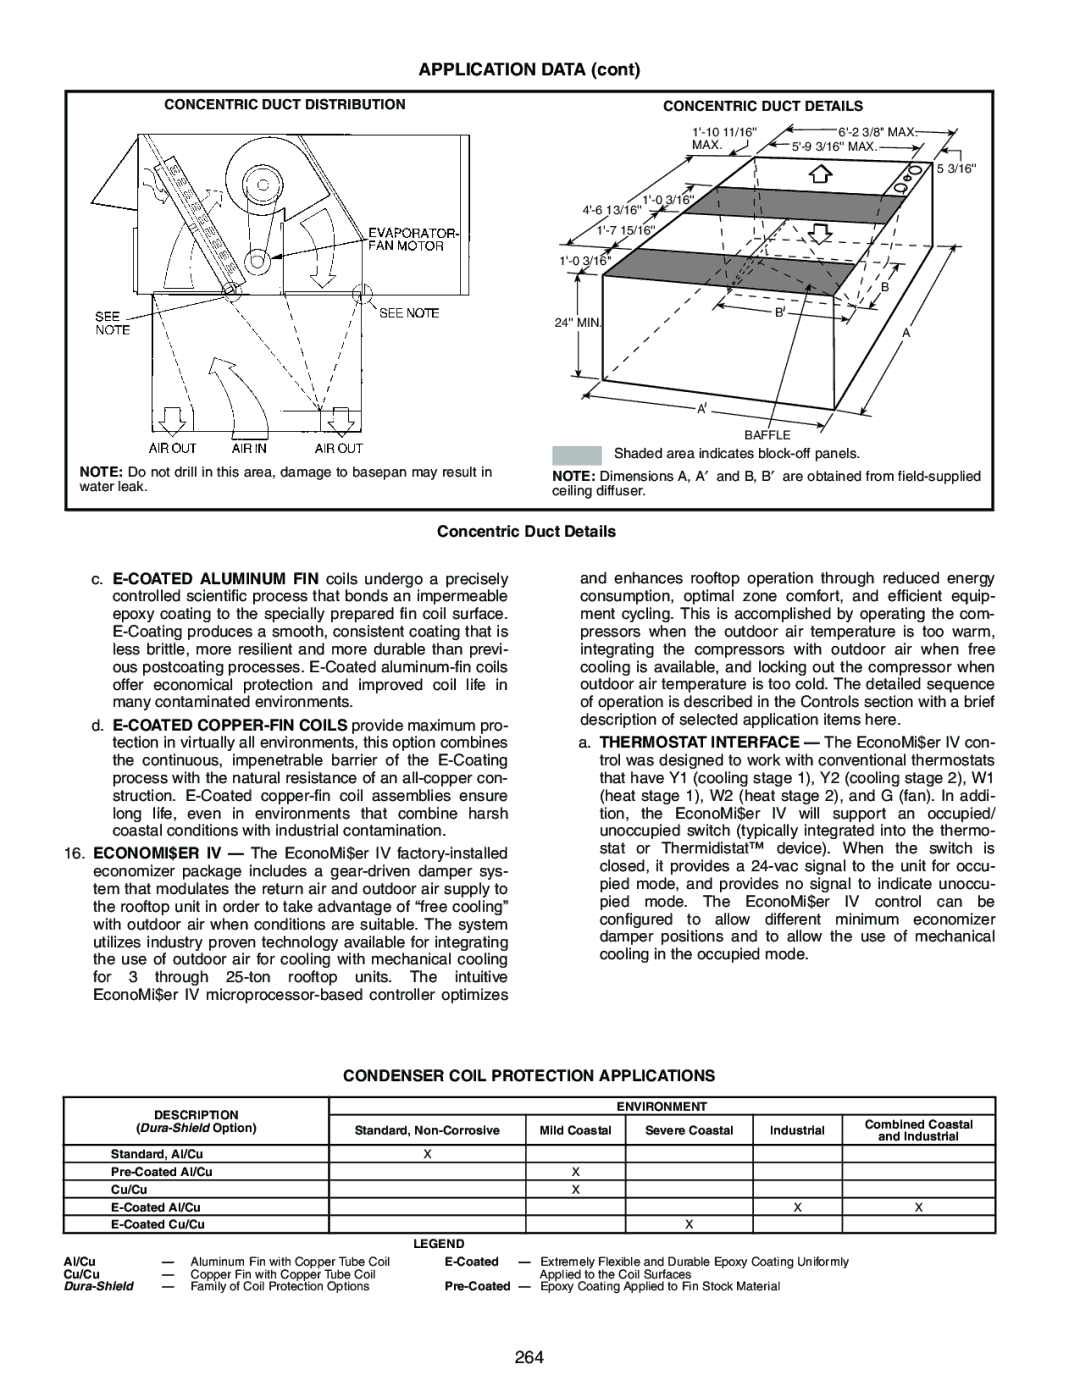 Bryant 581A/B Application Data, Concentric Duct Details, Condenser Coil Protection Applications, Description Environment 